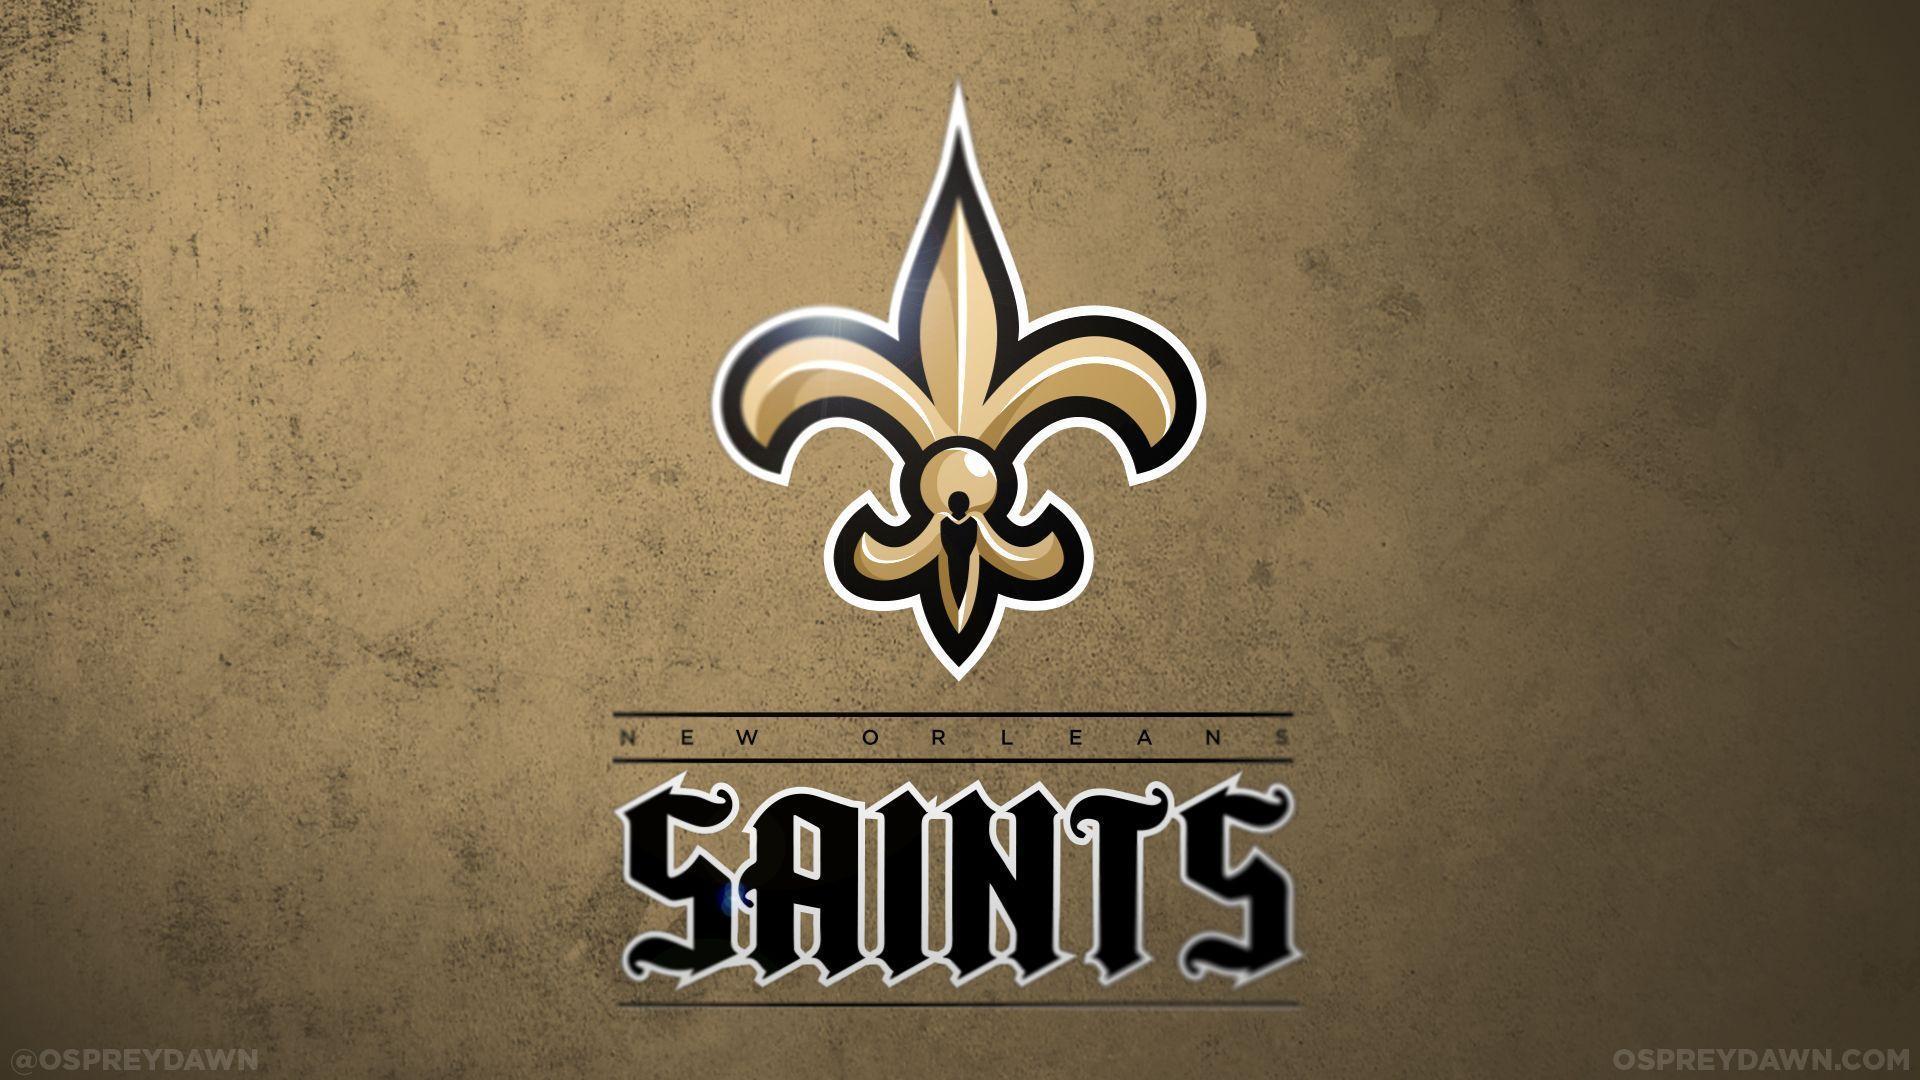 NFL Draft: New Orleans Saints draft needs